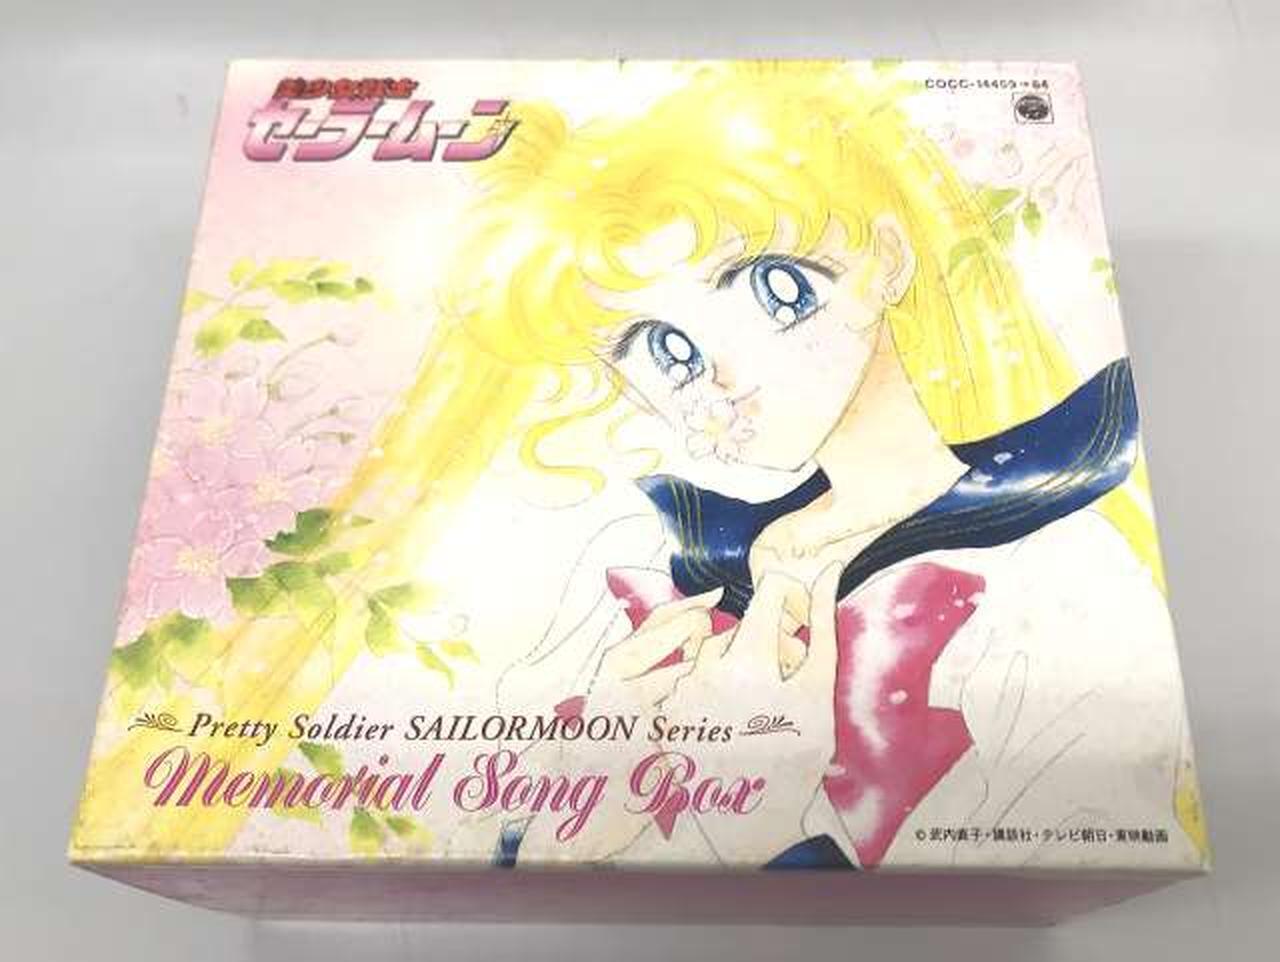 Mr. Ms. Model number Sailor Moon Memorial Song Box COLUMBIA